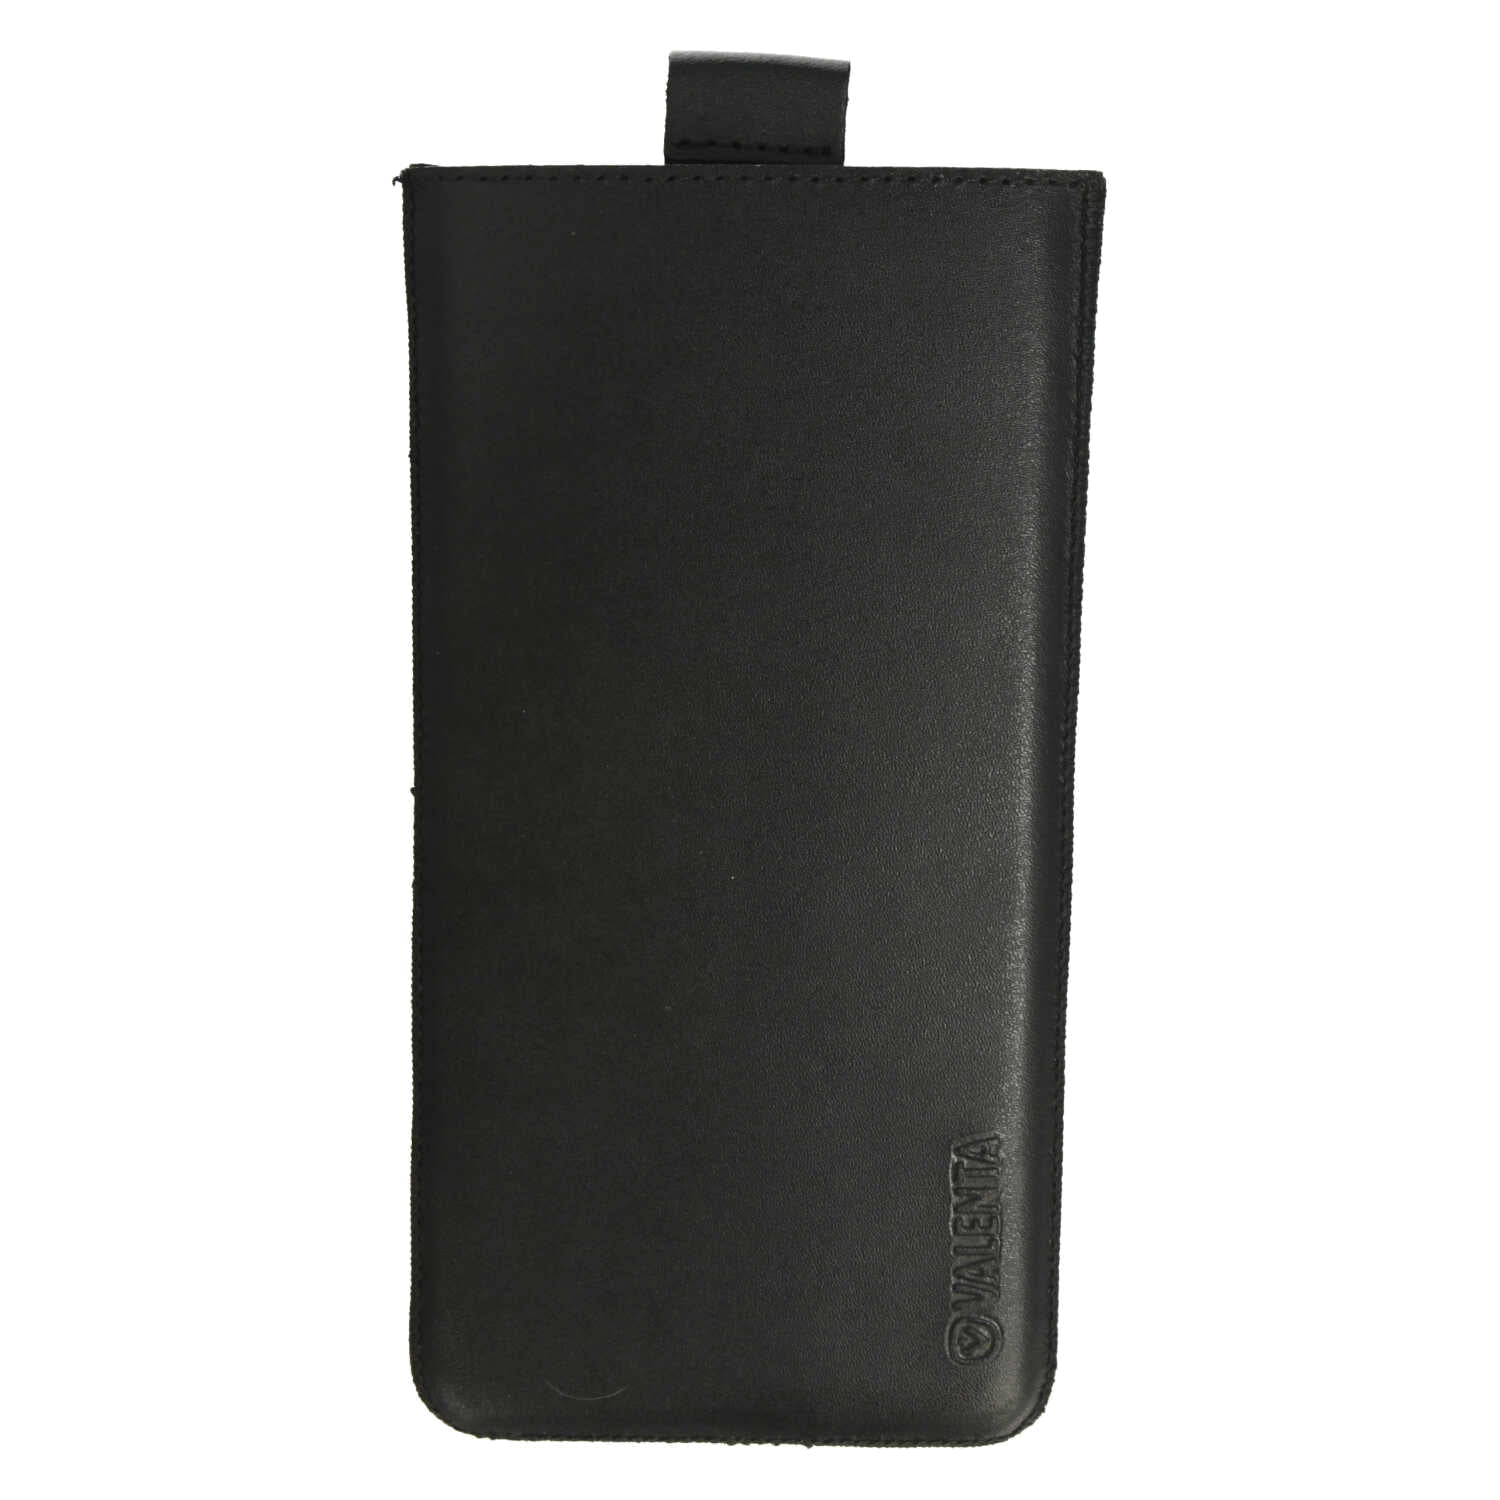  Einschubhülle Pocket Classic Schwarz iPhone 12 / 13 Pro Max - H160 x B77 x D9